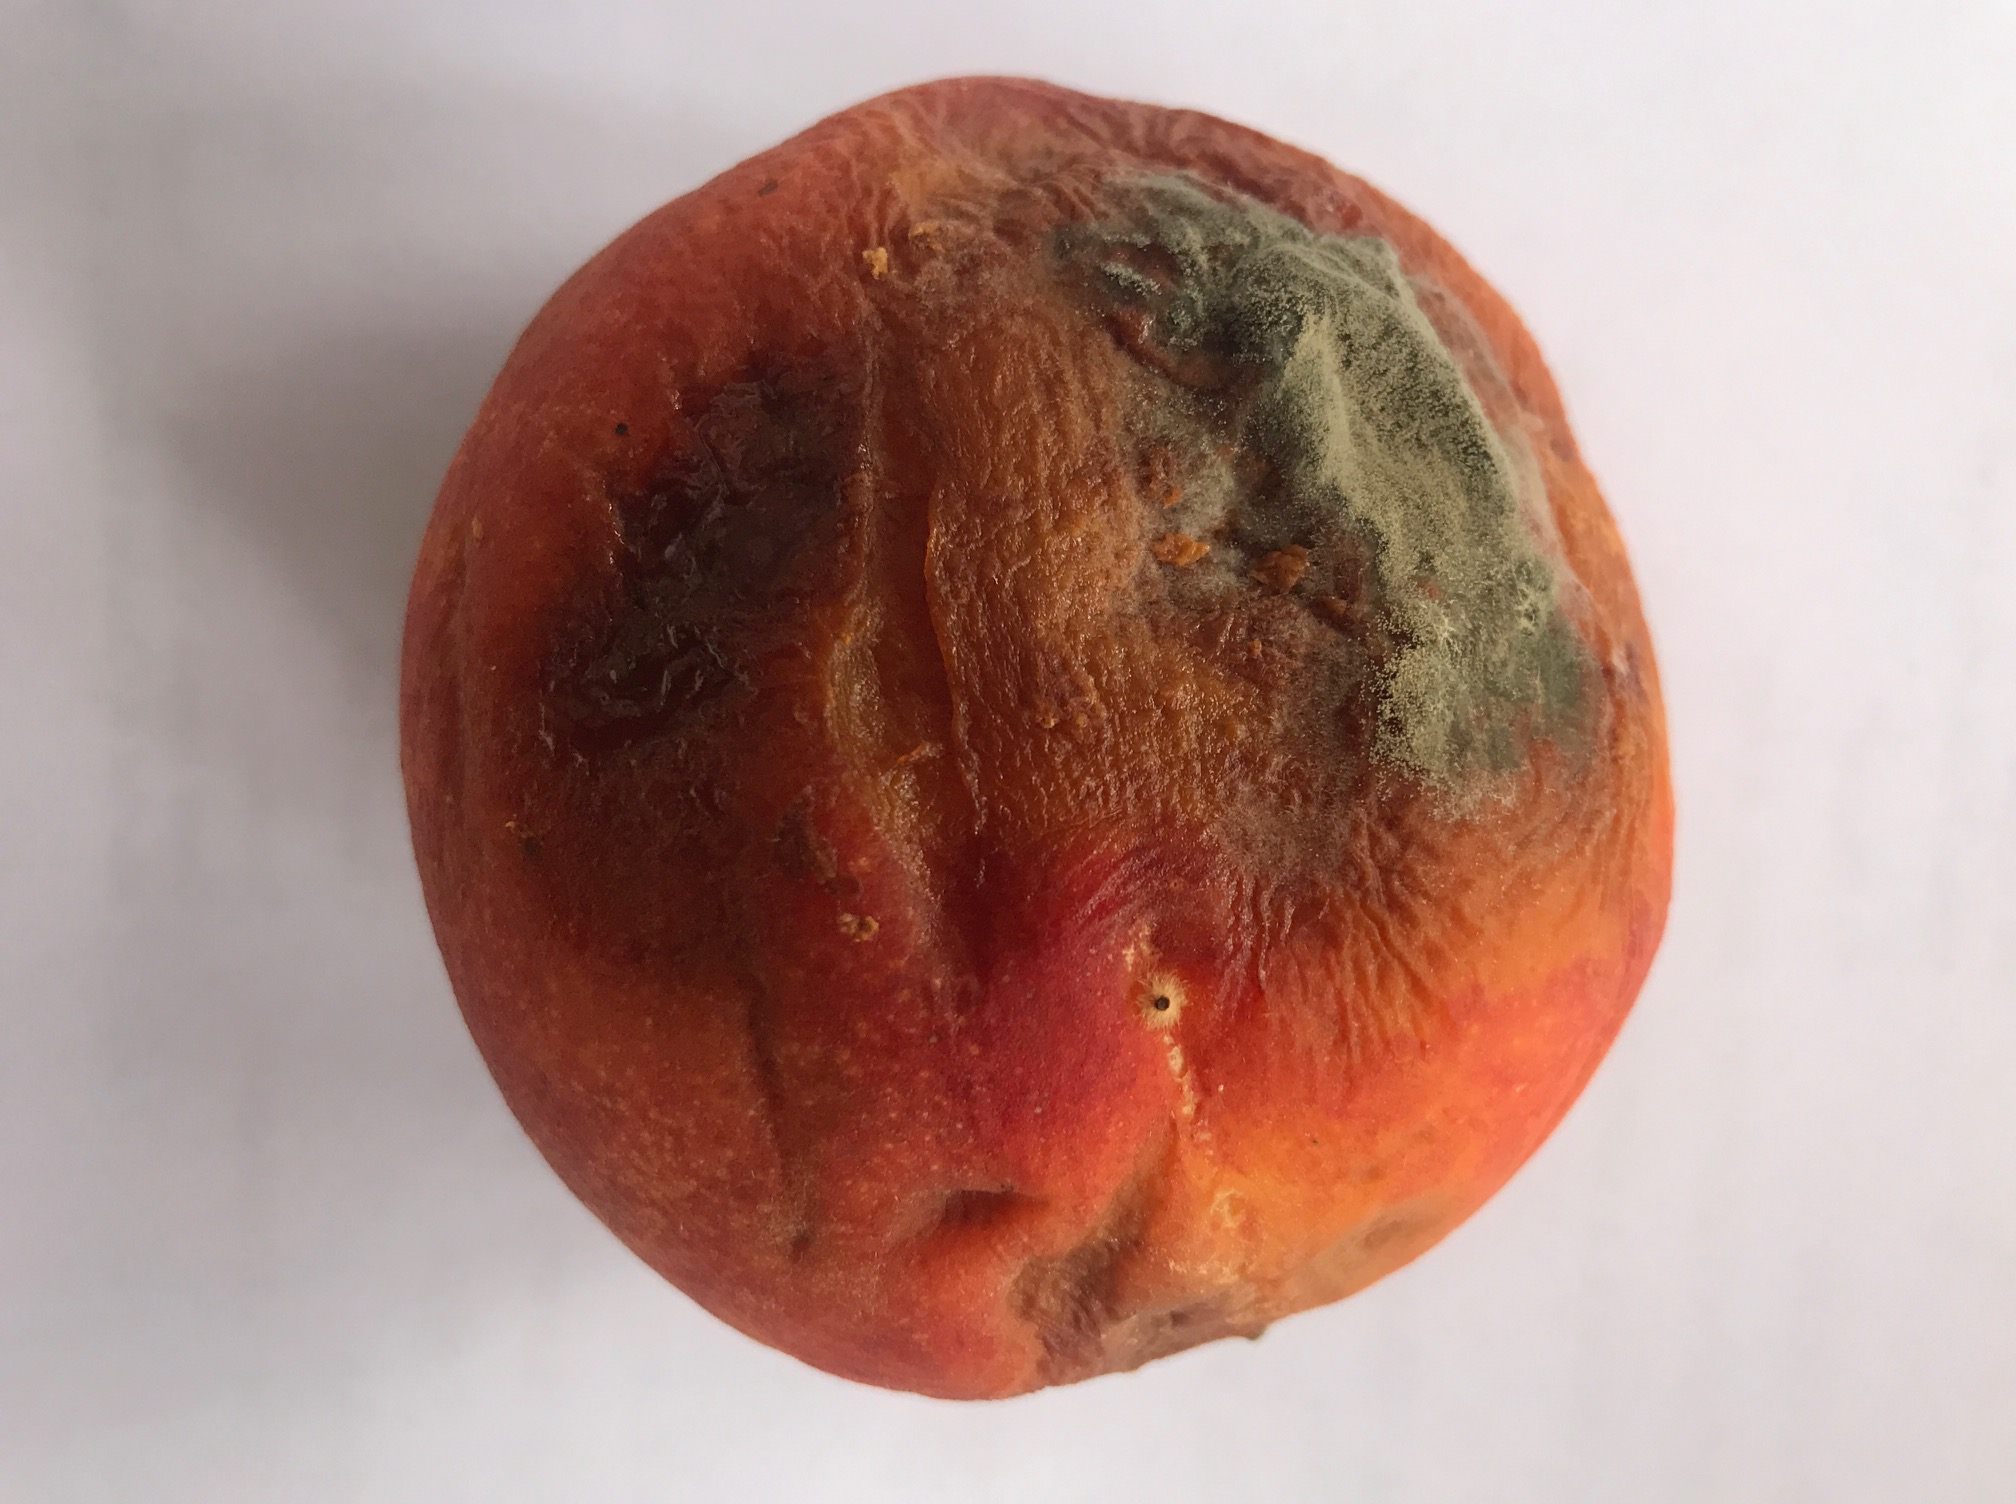 slightly bruised, moldy peach